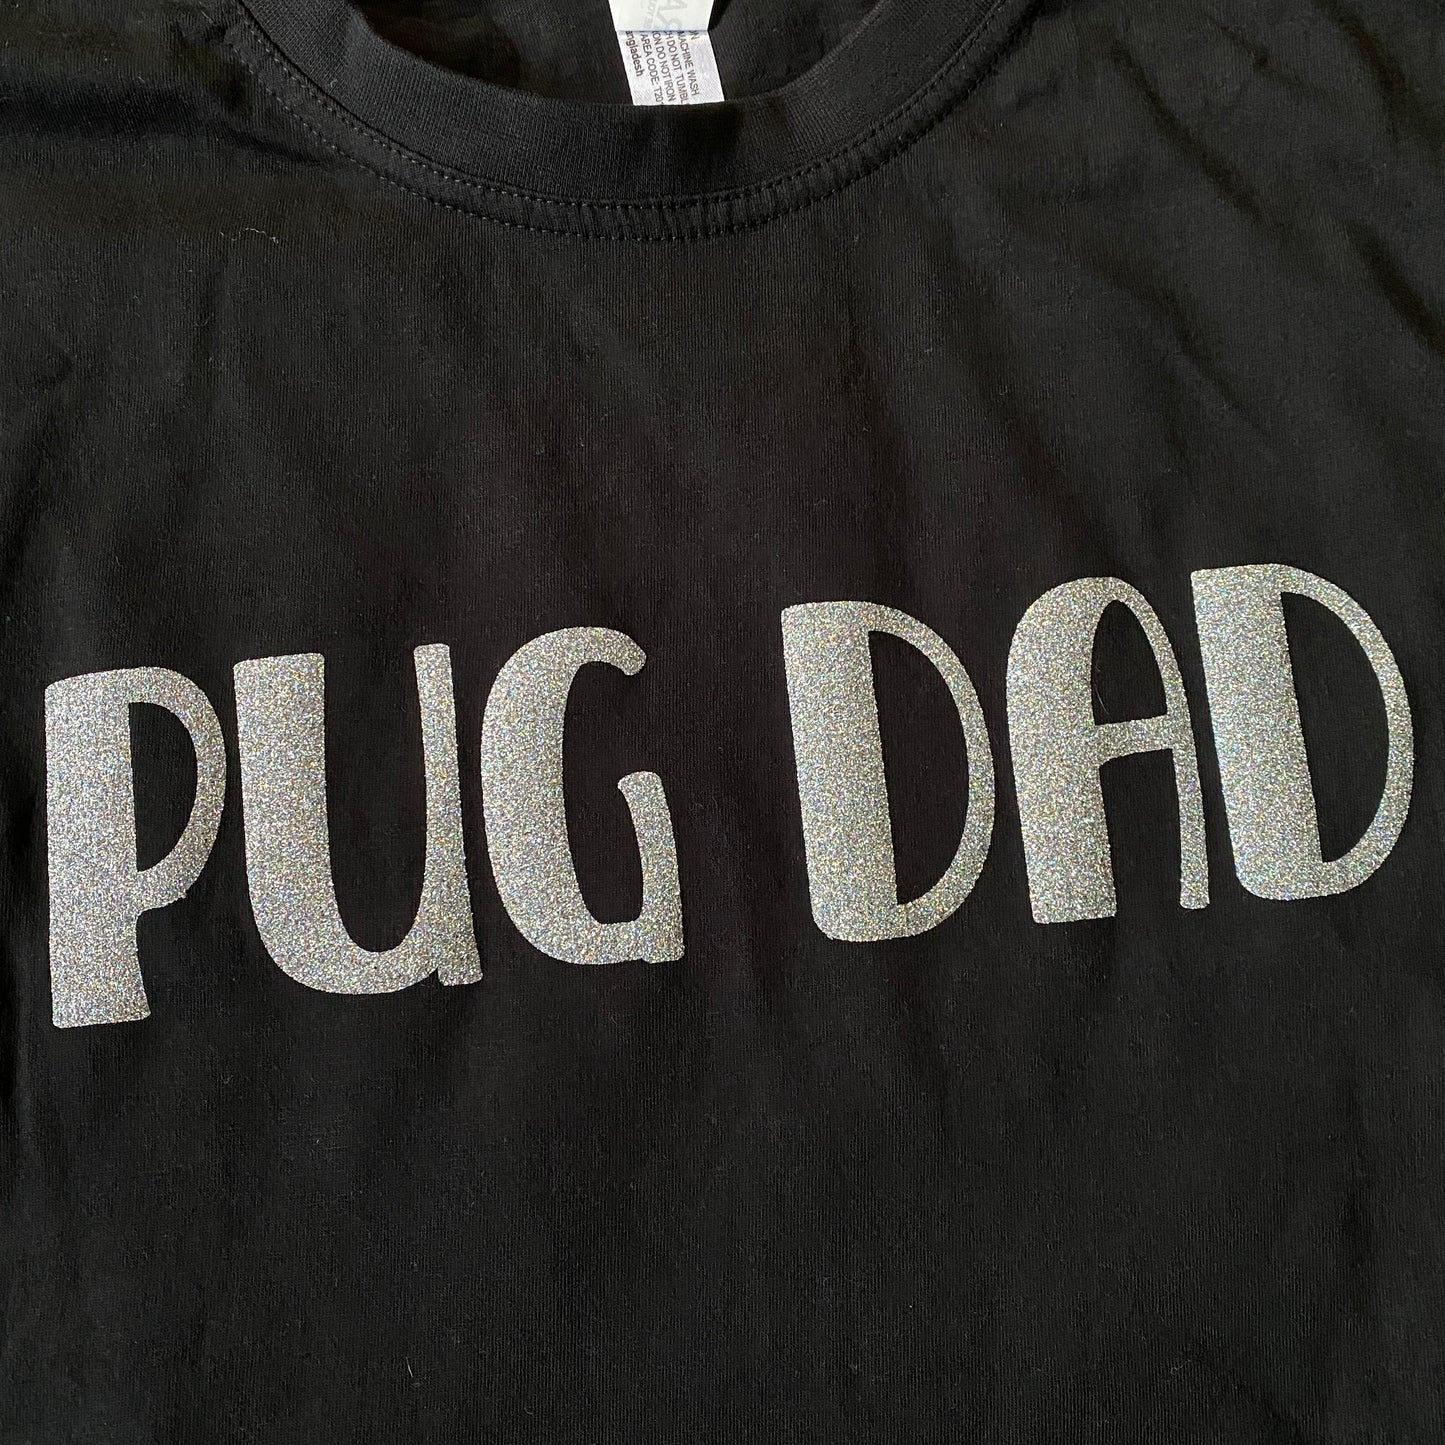 Pug Dad Unisex T-Shirt